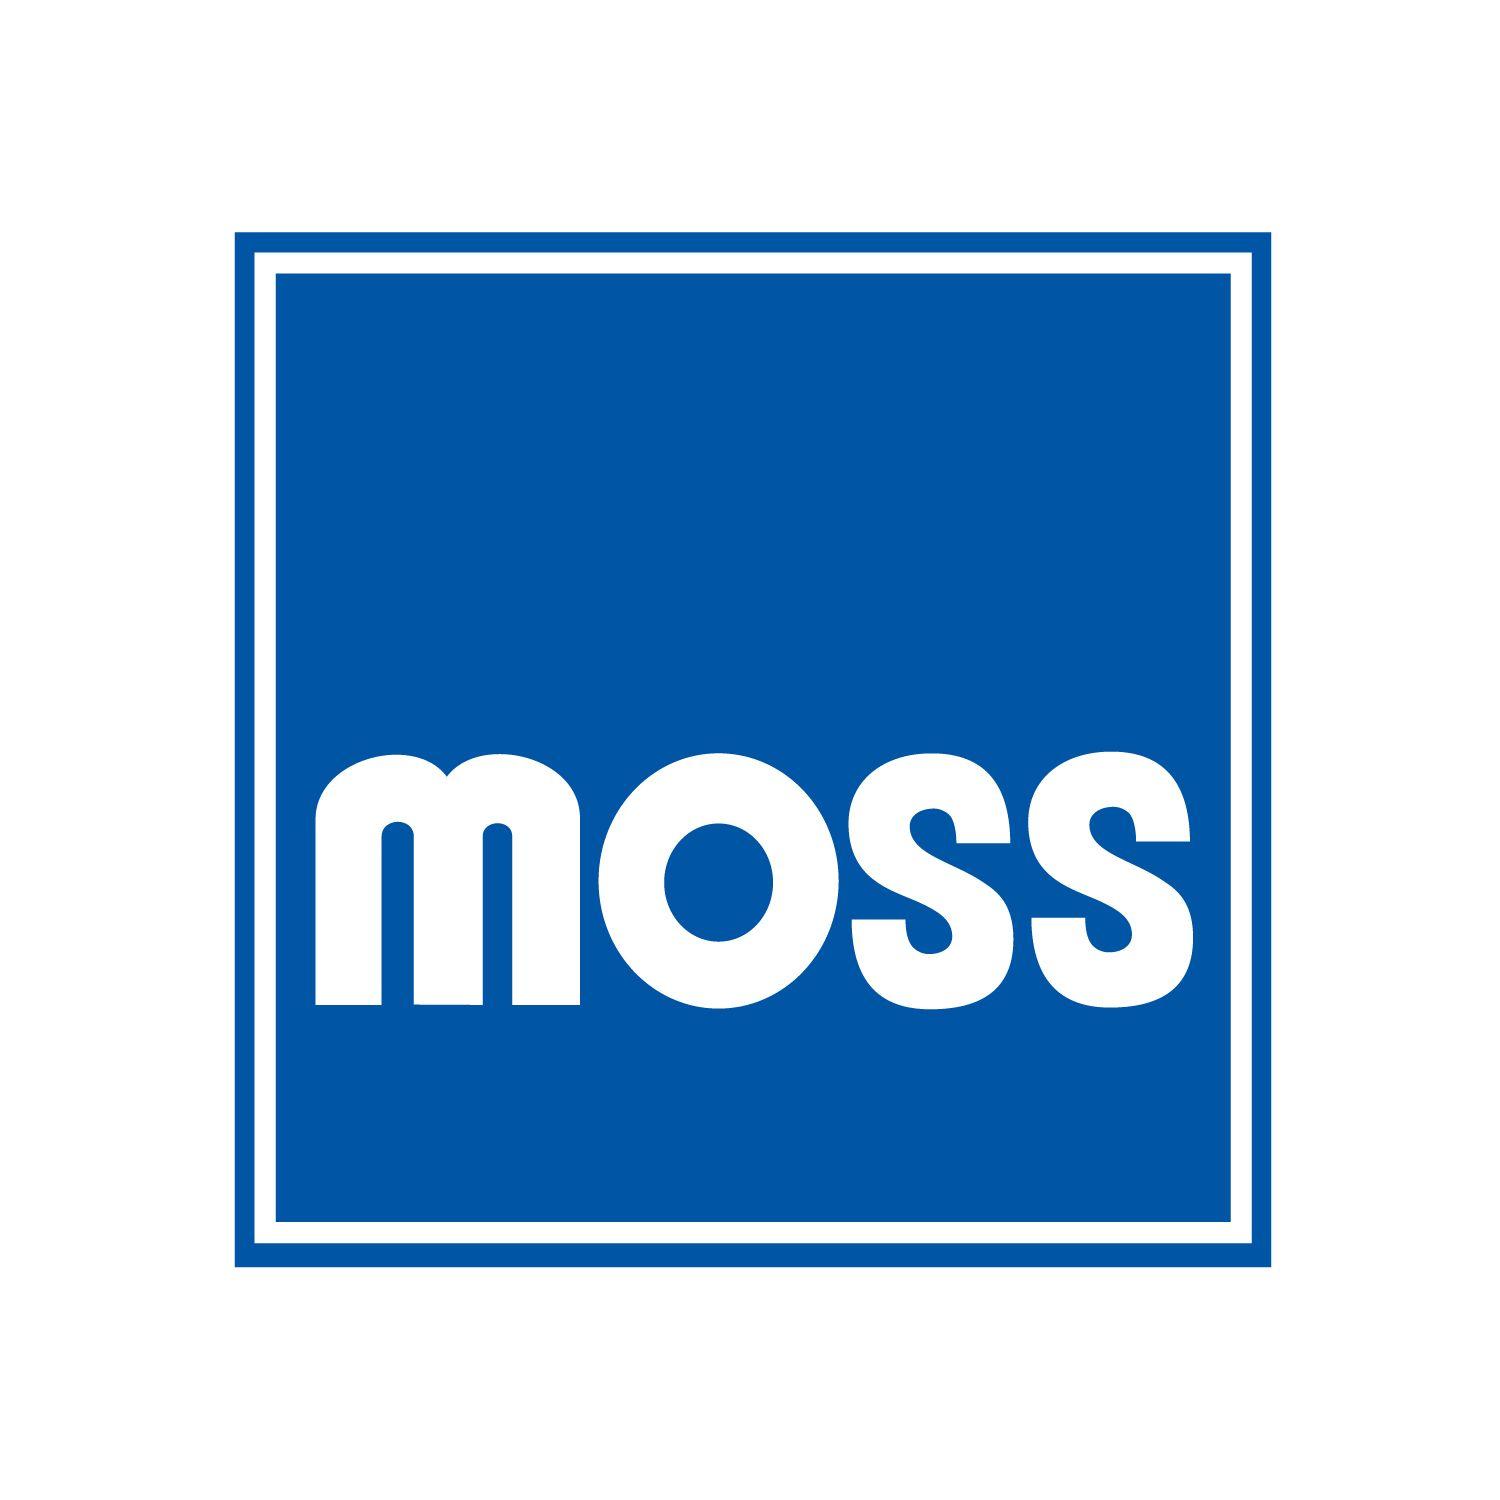 Moss Logo - Moss Motors Logos